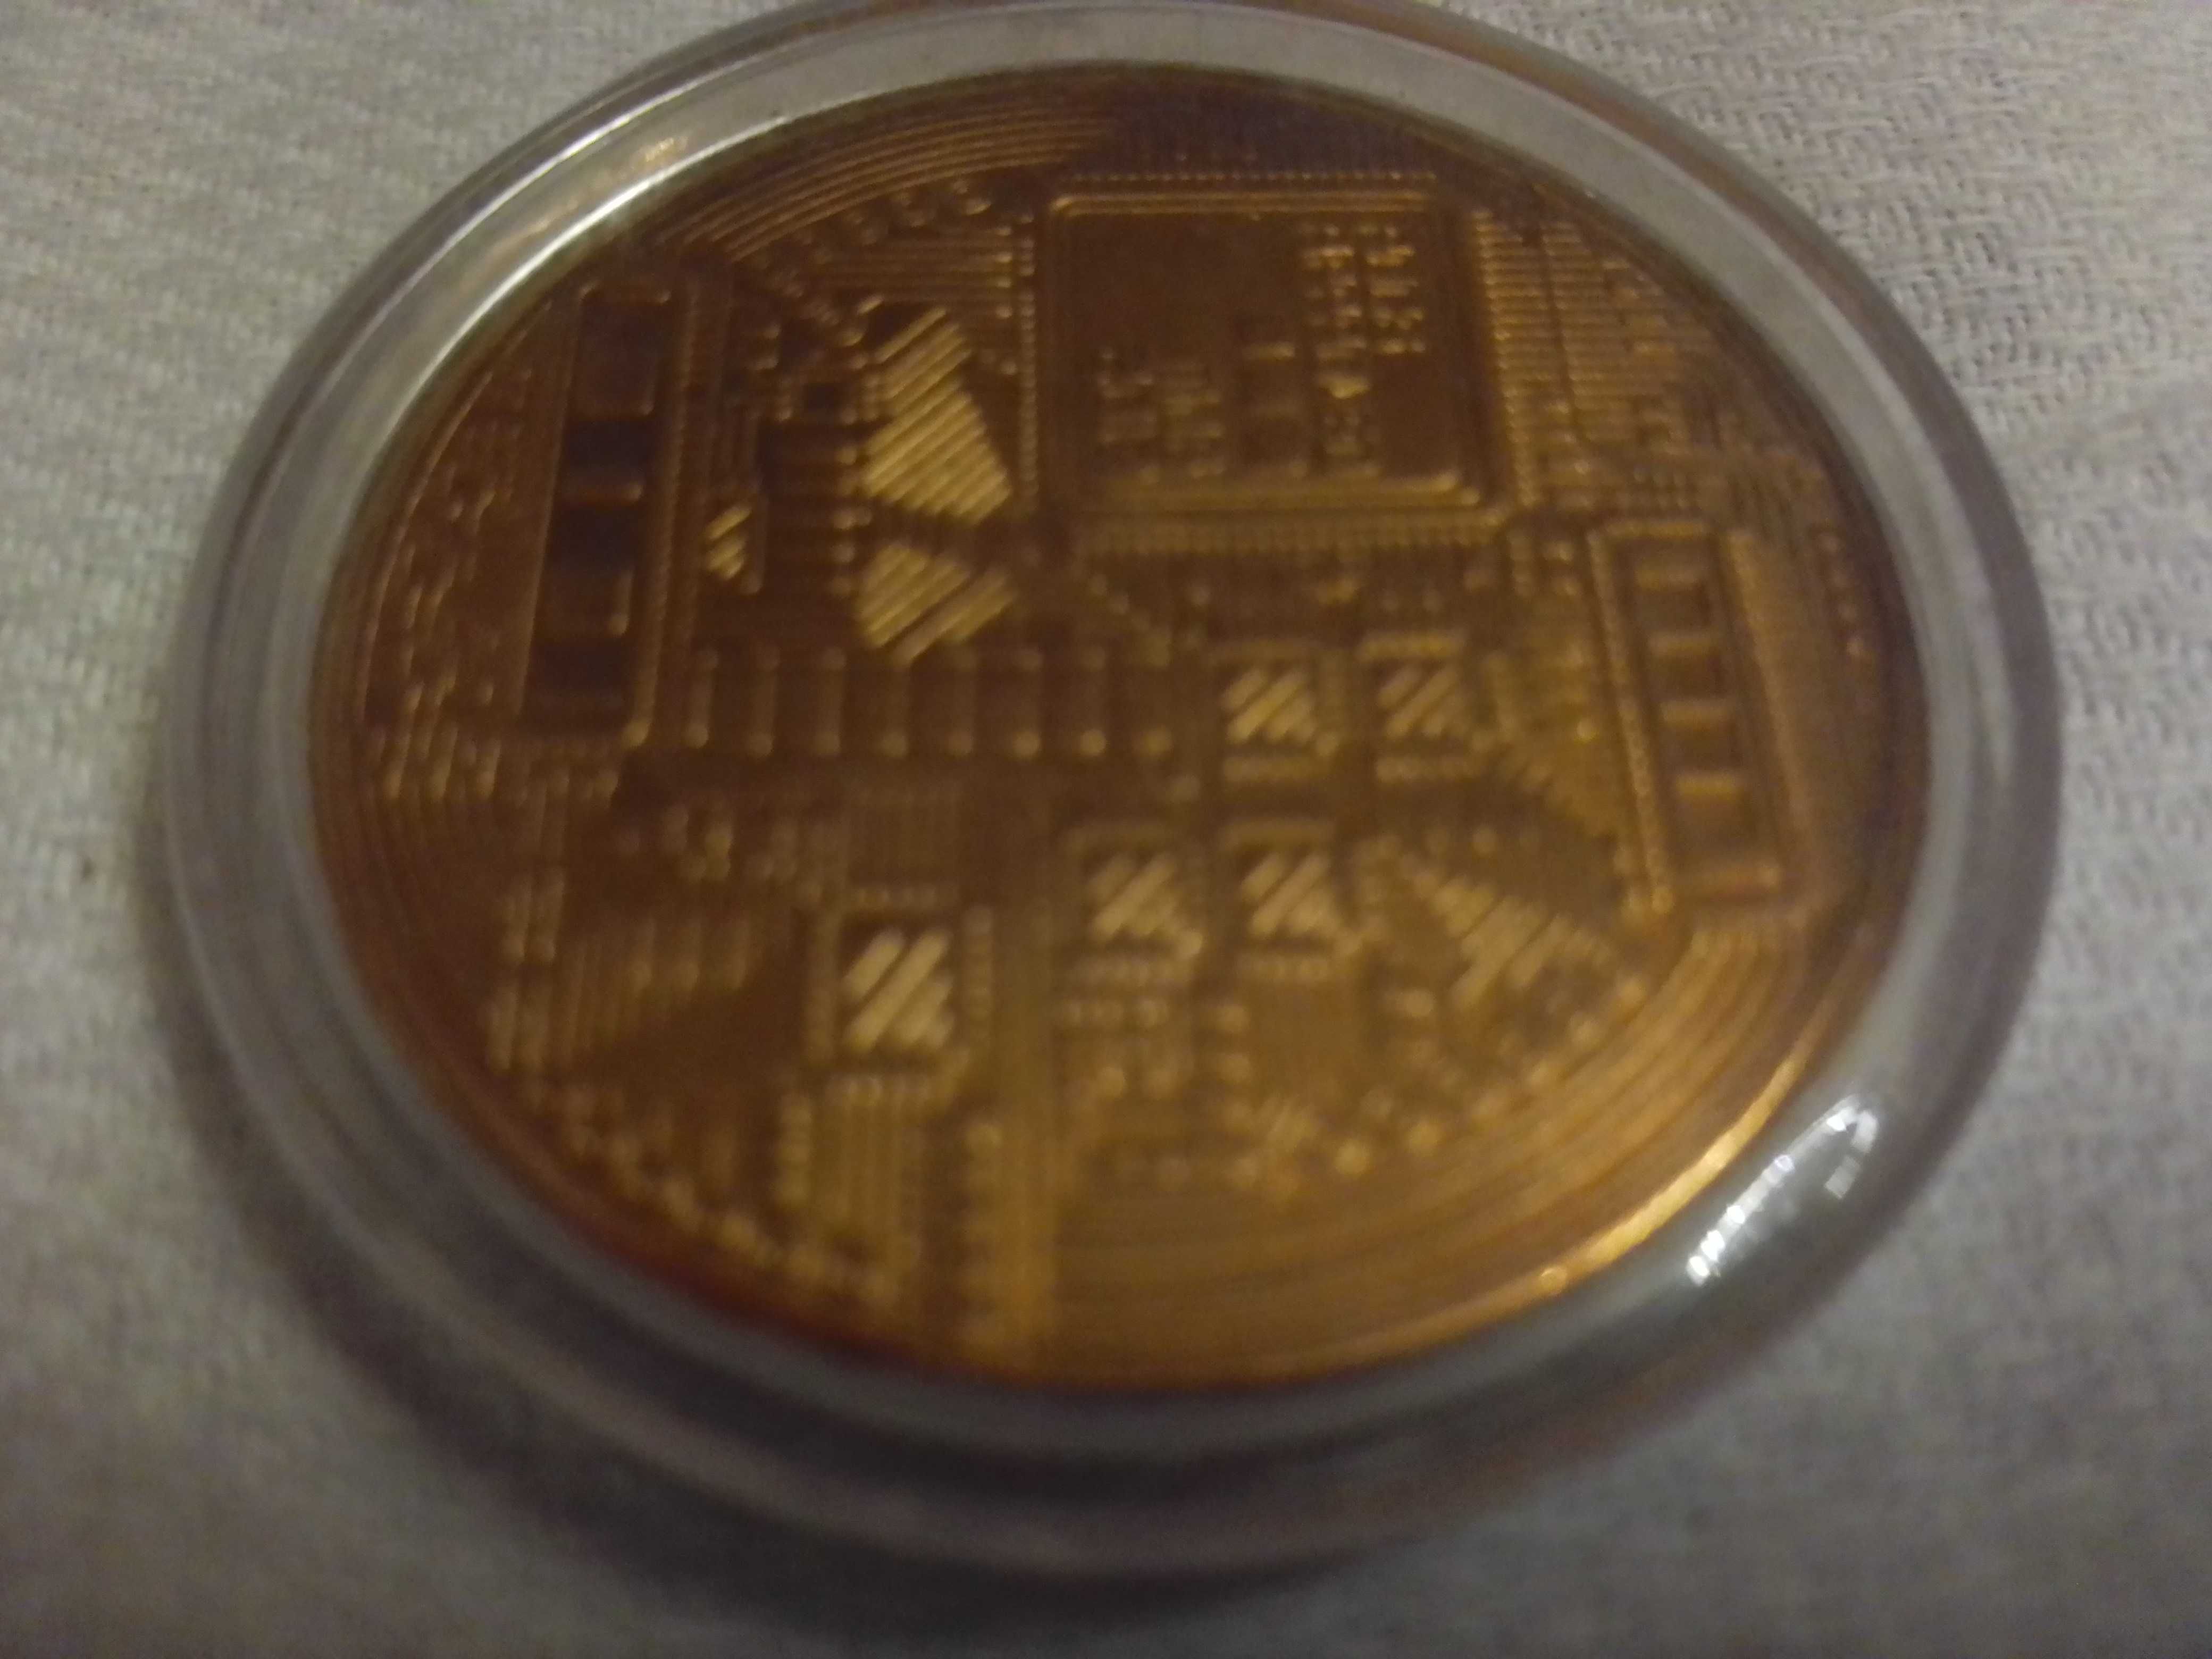 Bitcoin miedź moneta kolekcjonerska w kapsule